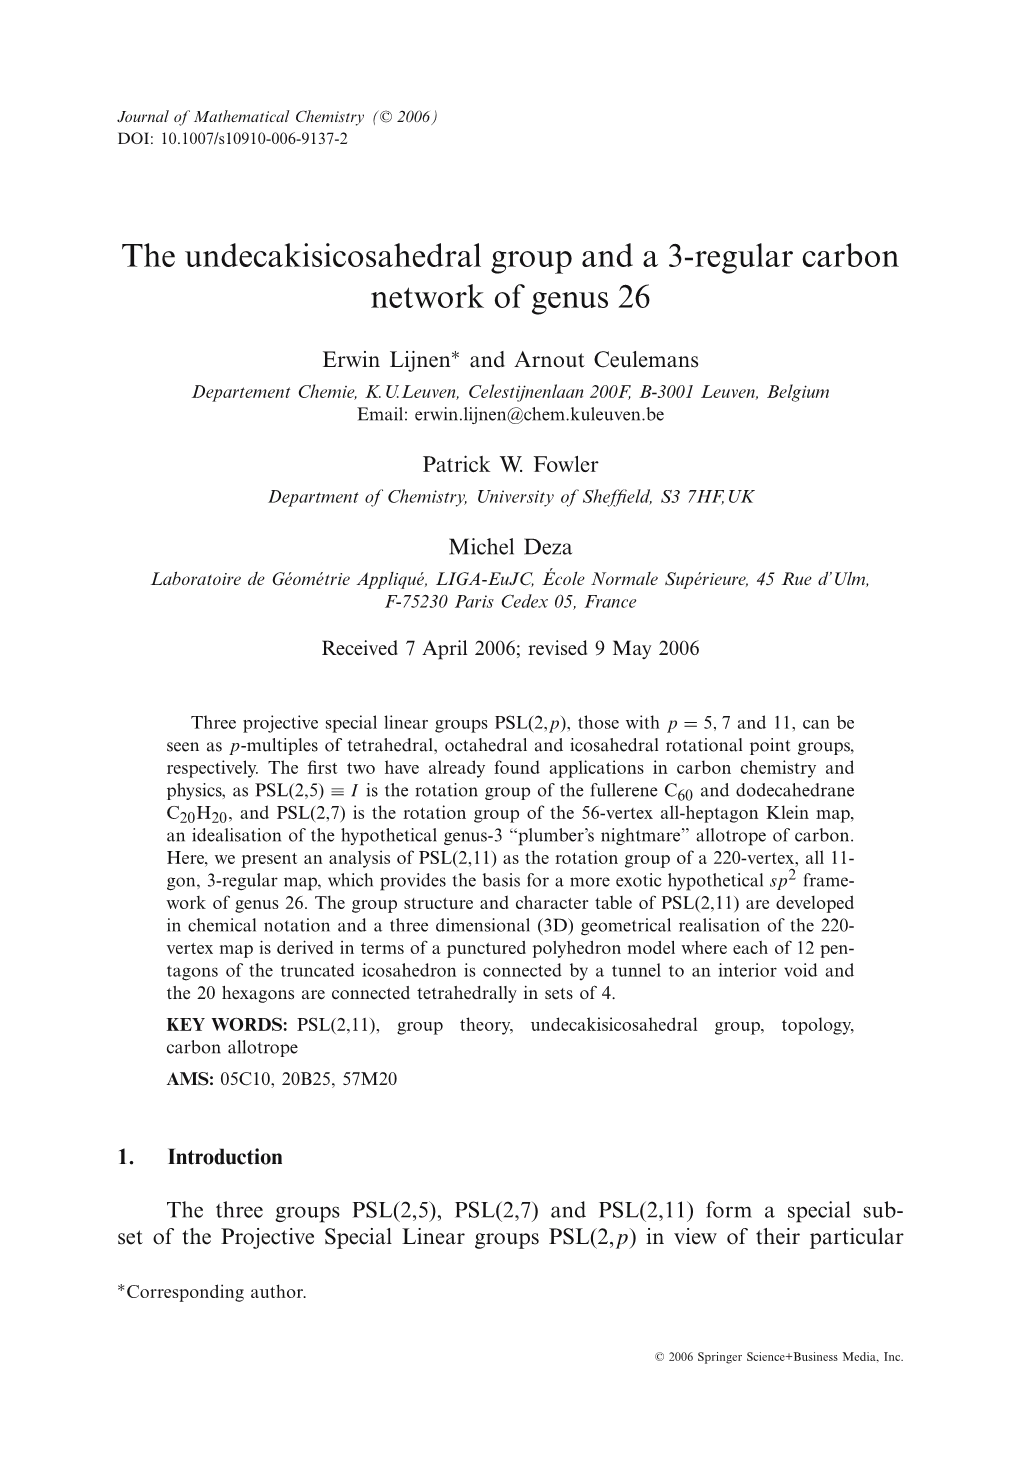 And 3-Regular Carbon Network of Genus 26